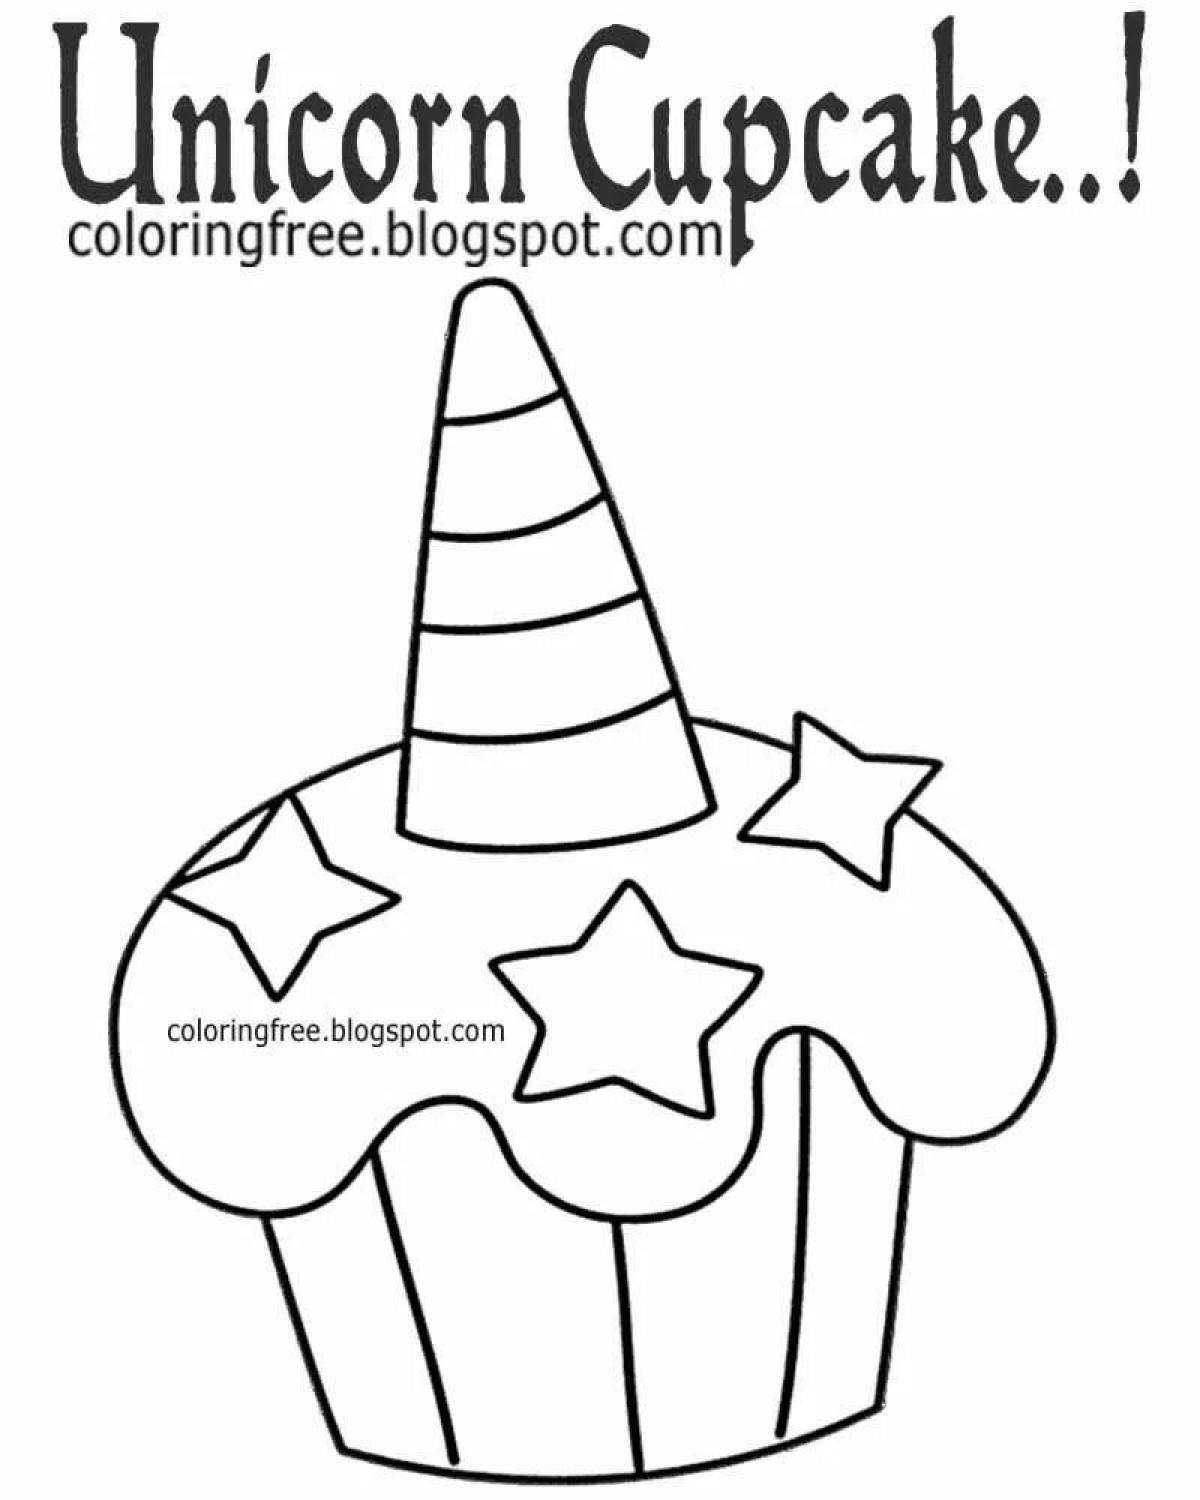 Coloring unicorn cake